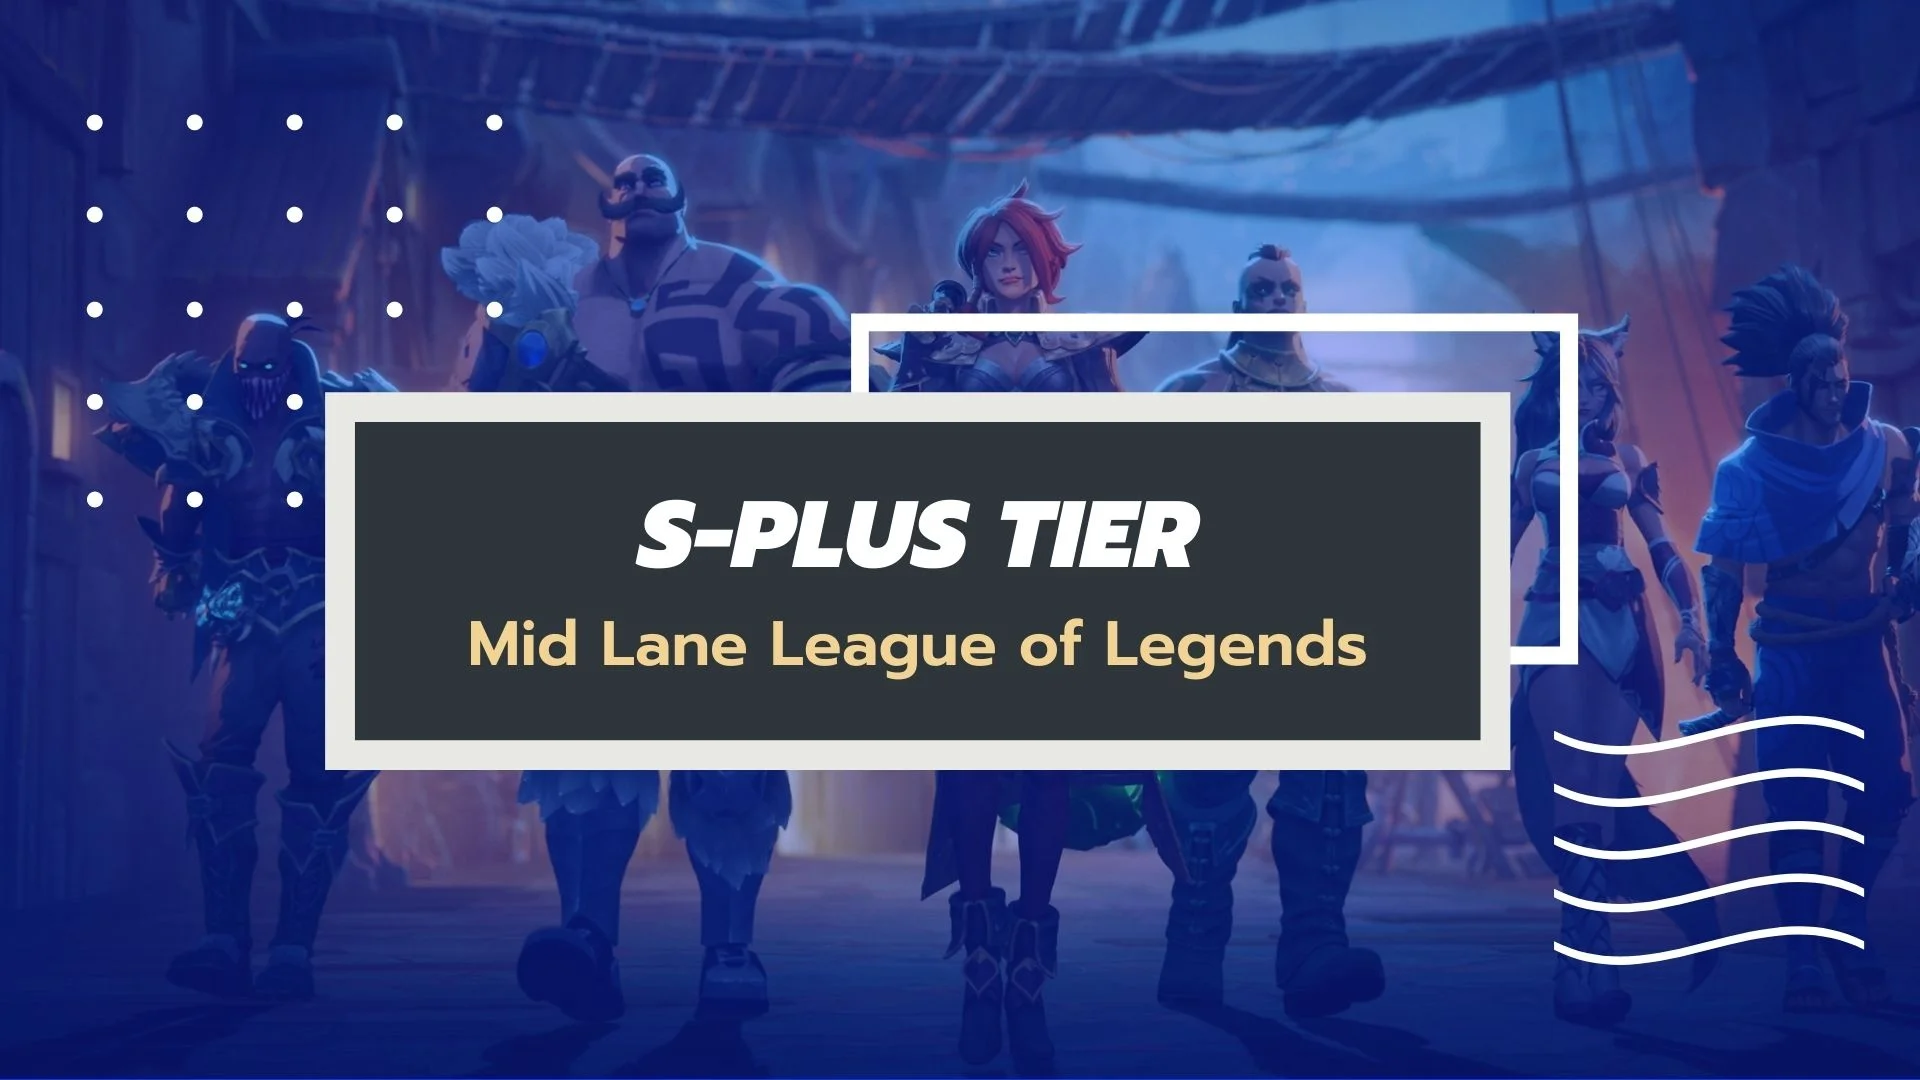 league of legends top lane tier list｜TikTok Search